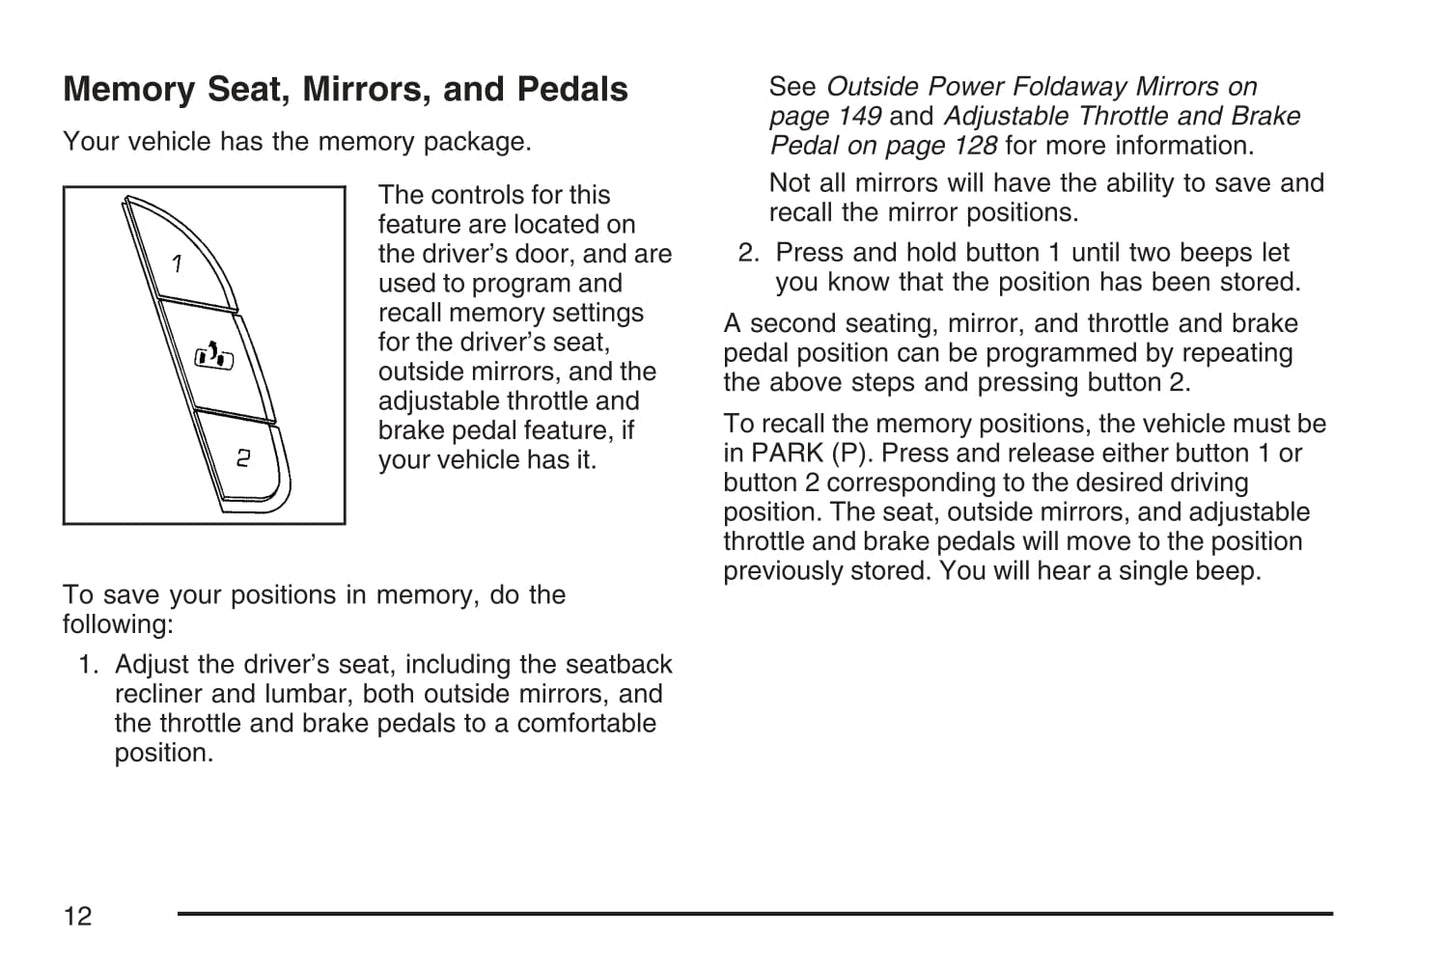 2007 Cadillac Escalade Gebruikershandleiding | Engels